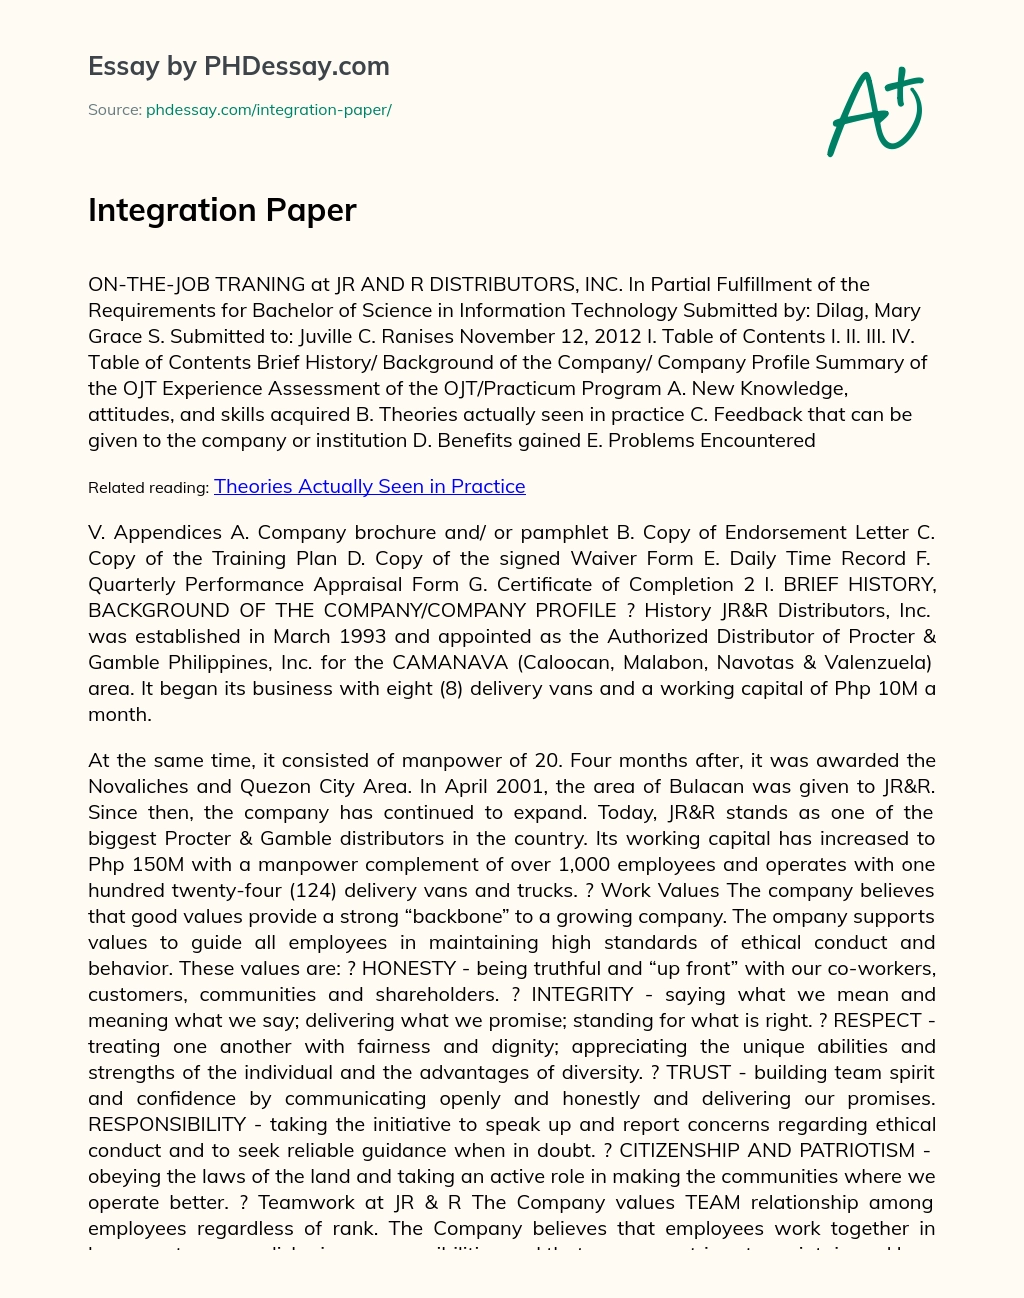 Integration Paper essay